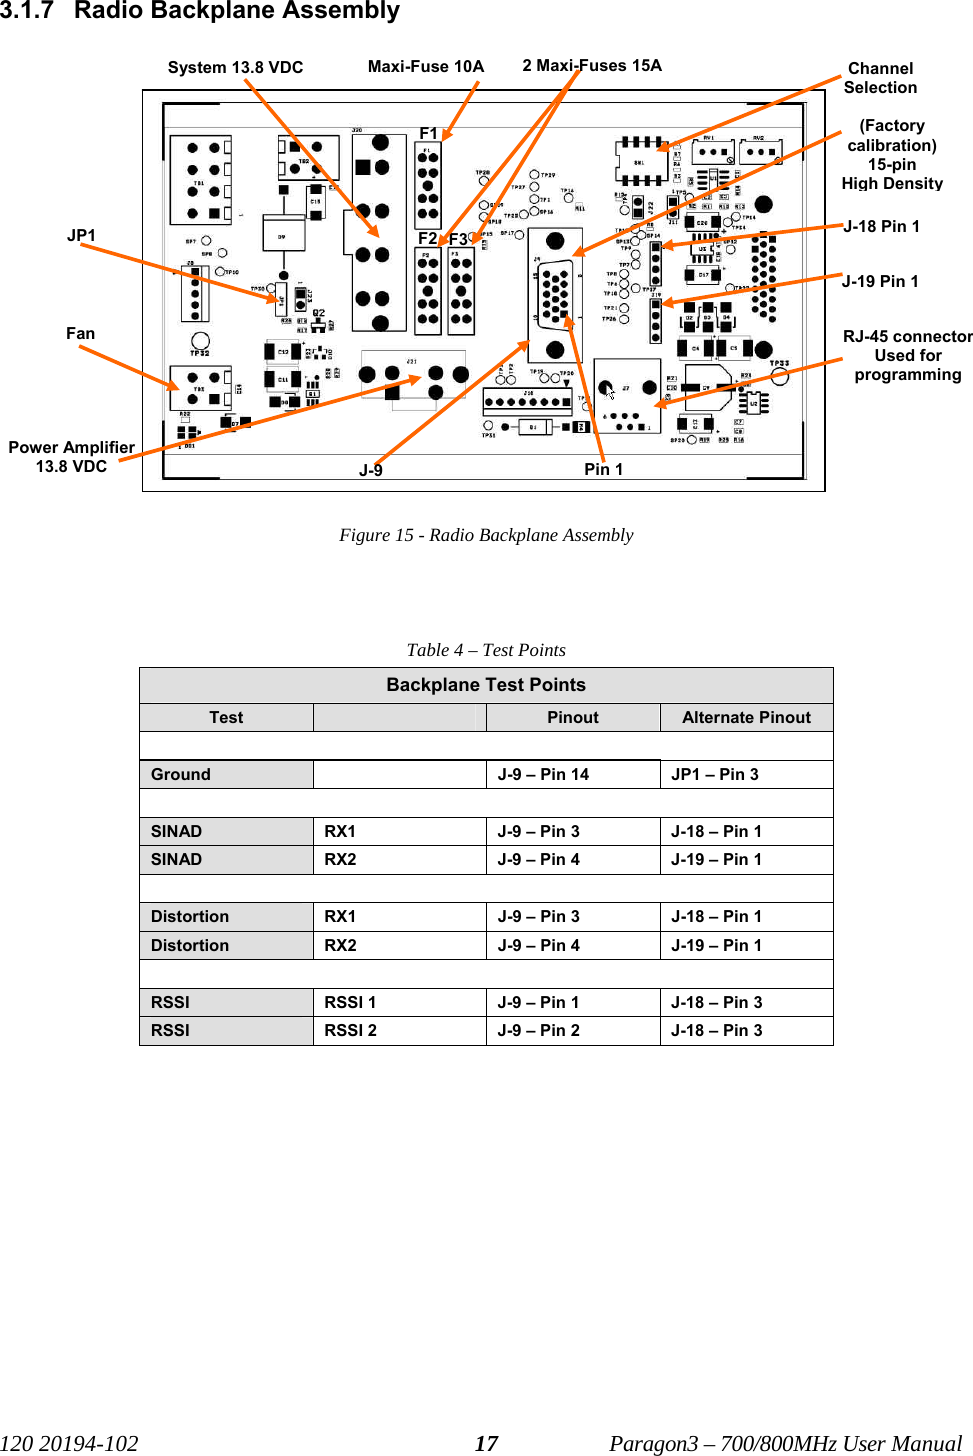   120 20194-102   Paragon3 – 700/800MHz User Manual 173.1.7  Radio Backplane Assembly  Figure 15 - Radio Backplane Assembly Table 4 – Test Points Backplane Test Points Test   Pinout  Alternate Pinout  Ground    J-9 – Pin 14  JP1 – Pin 3  SINAD  RX1  J-9 – Pin 3  J-18 – Pin 1 SINAD  RX2  J-9 – Pin 4  J-19 – Pin 1  Distortion  RX1  J-9 – Pin 3  J-18 – Pin 1 Distortion  RX2  J-9 – Pin 4  J-19 – Pin 1  RSSI  RSSI 1  J-9 – Pin 1  J-18 – Pin 3 RSSI  RSSI 2  J-9 – Pin 2  J-18 – Pin 3  Power Amplifier 13.8 VDC Maxi-Fuse 10A  2 Maxi-Fuses 15A(Factory  calibration) 15-pin High DensityRJ-45 connector Used for  programming System 13.8 VDC Pin 1 F1 F3 F2 Fan Channel Selection J-9 J-18 Pin 1J-19 Pin 1JP1 